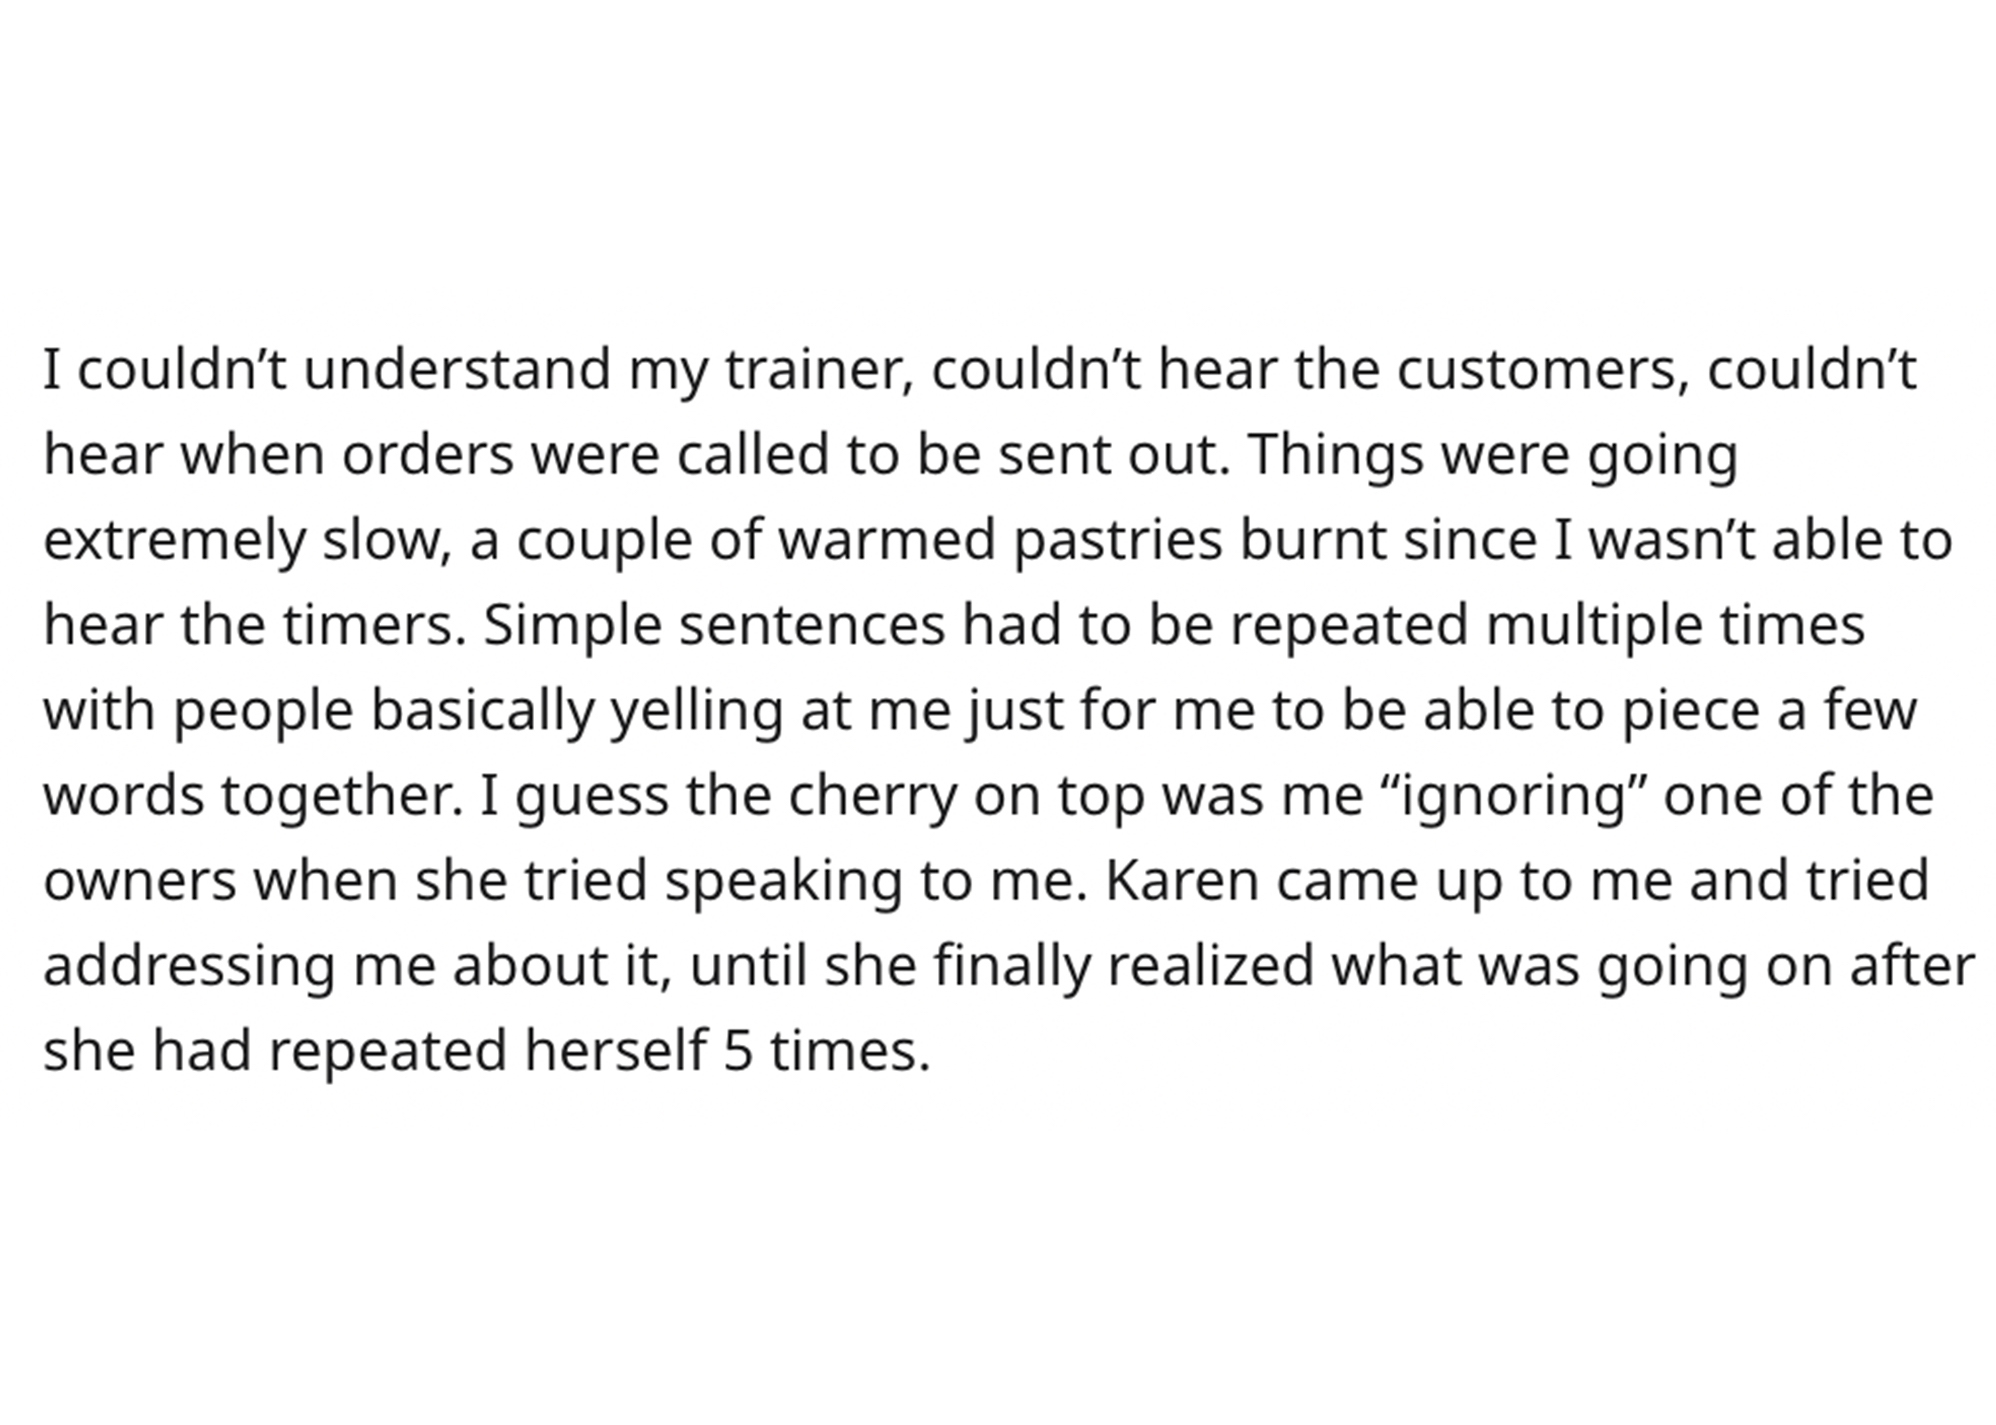 Karen Manager of Cafe story - sixth